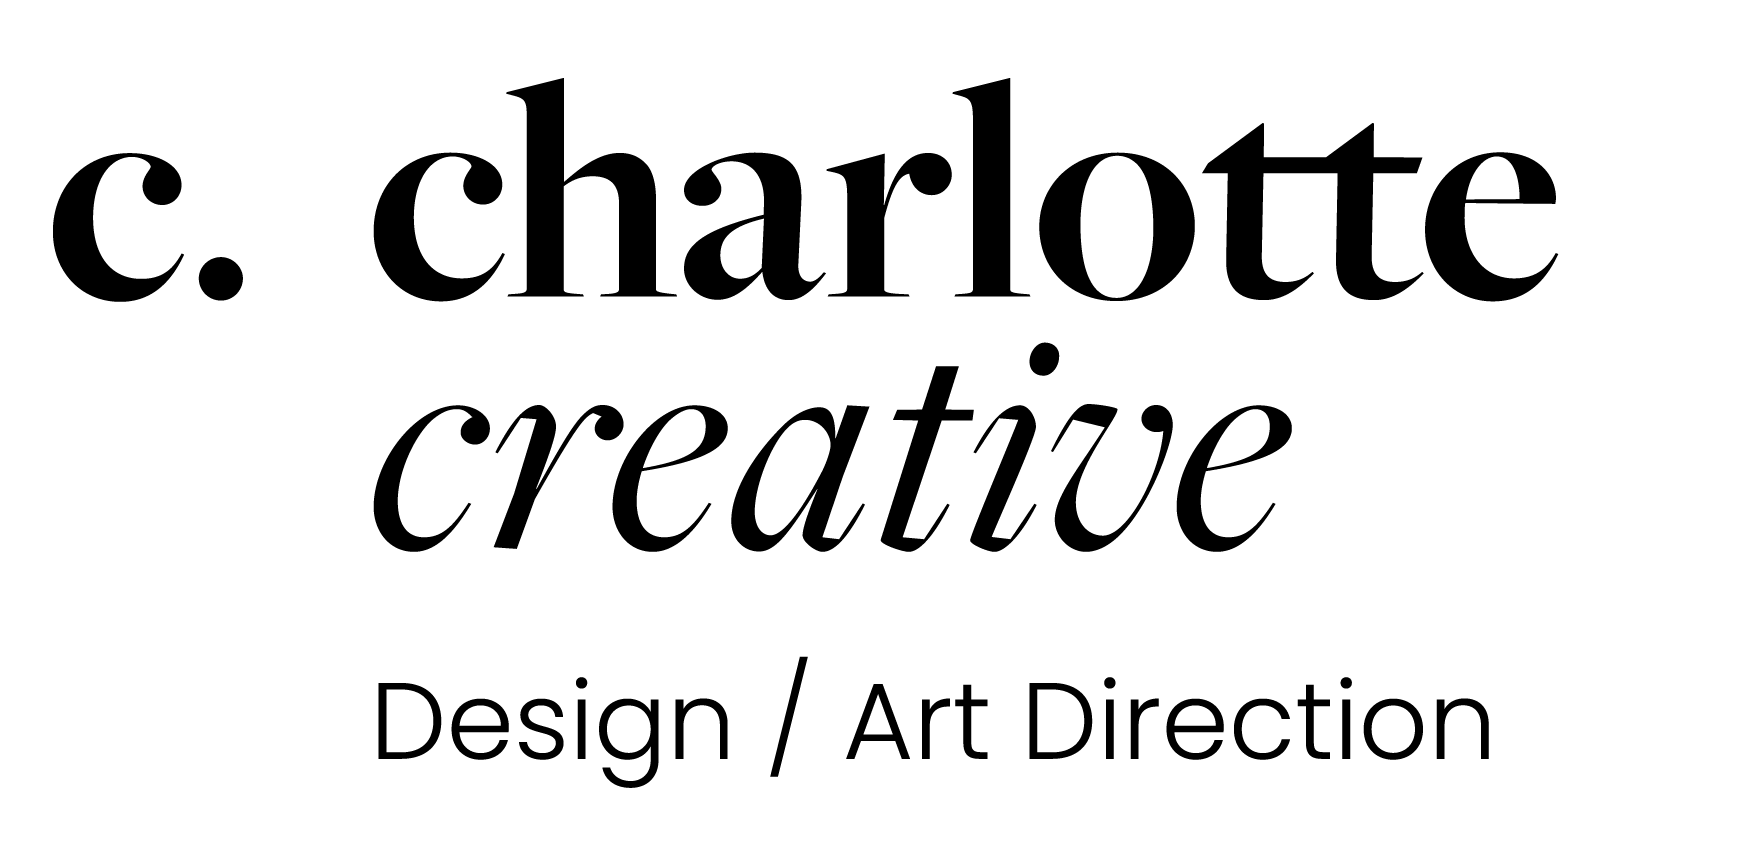 Charlotte Creative: Design / Art Direction